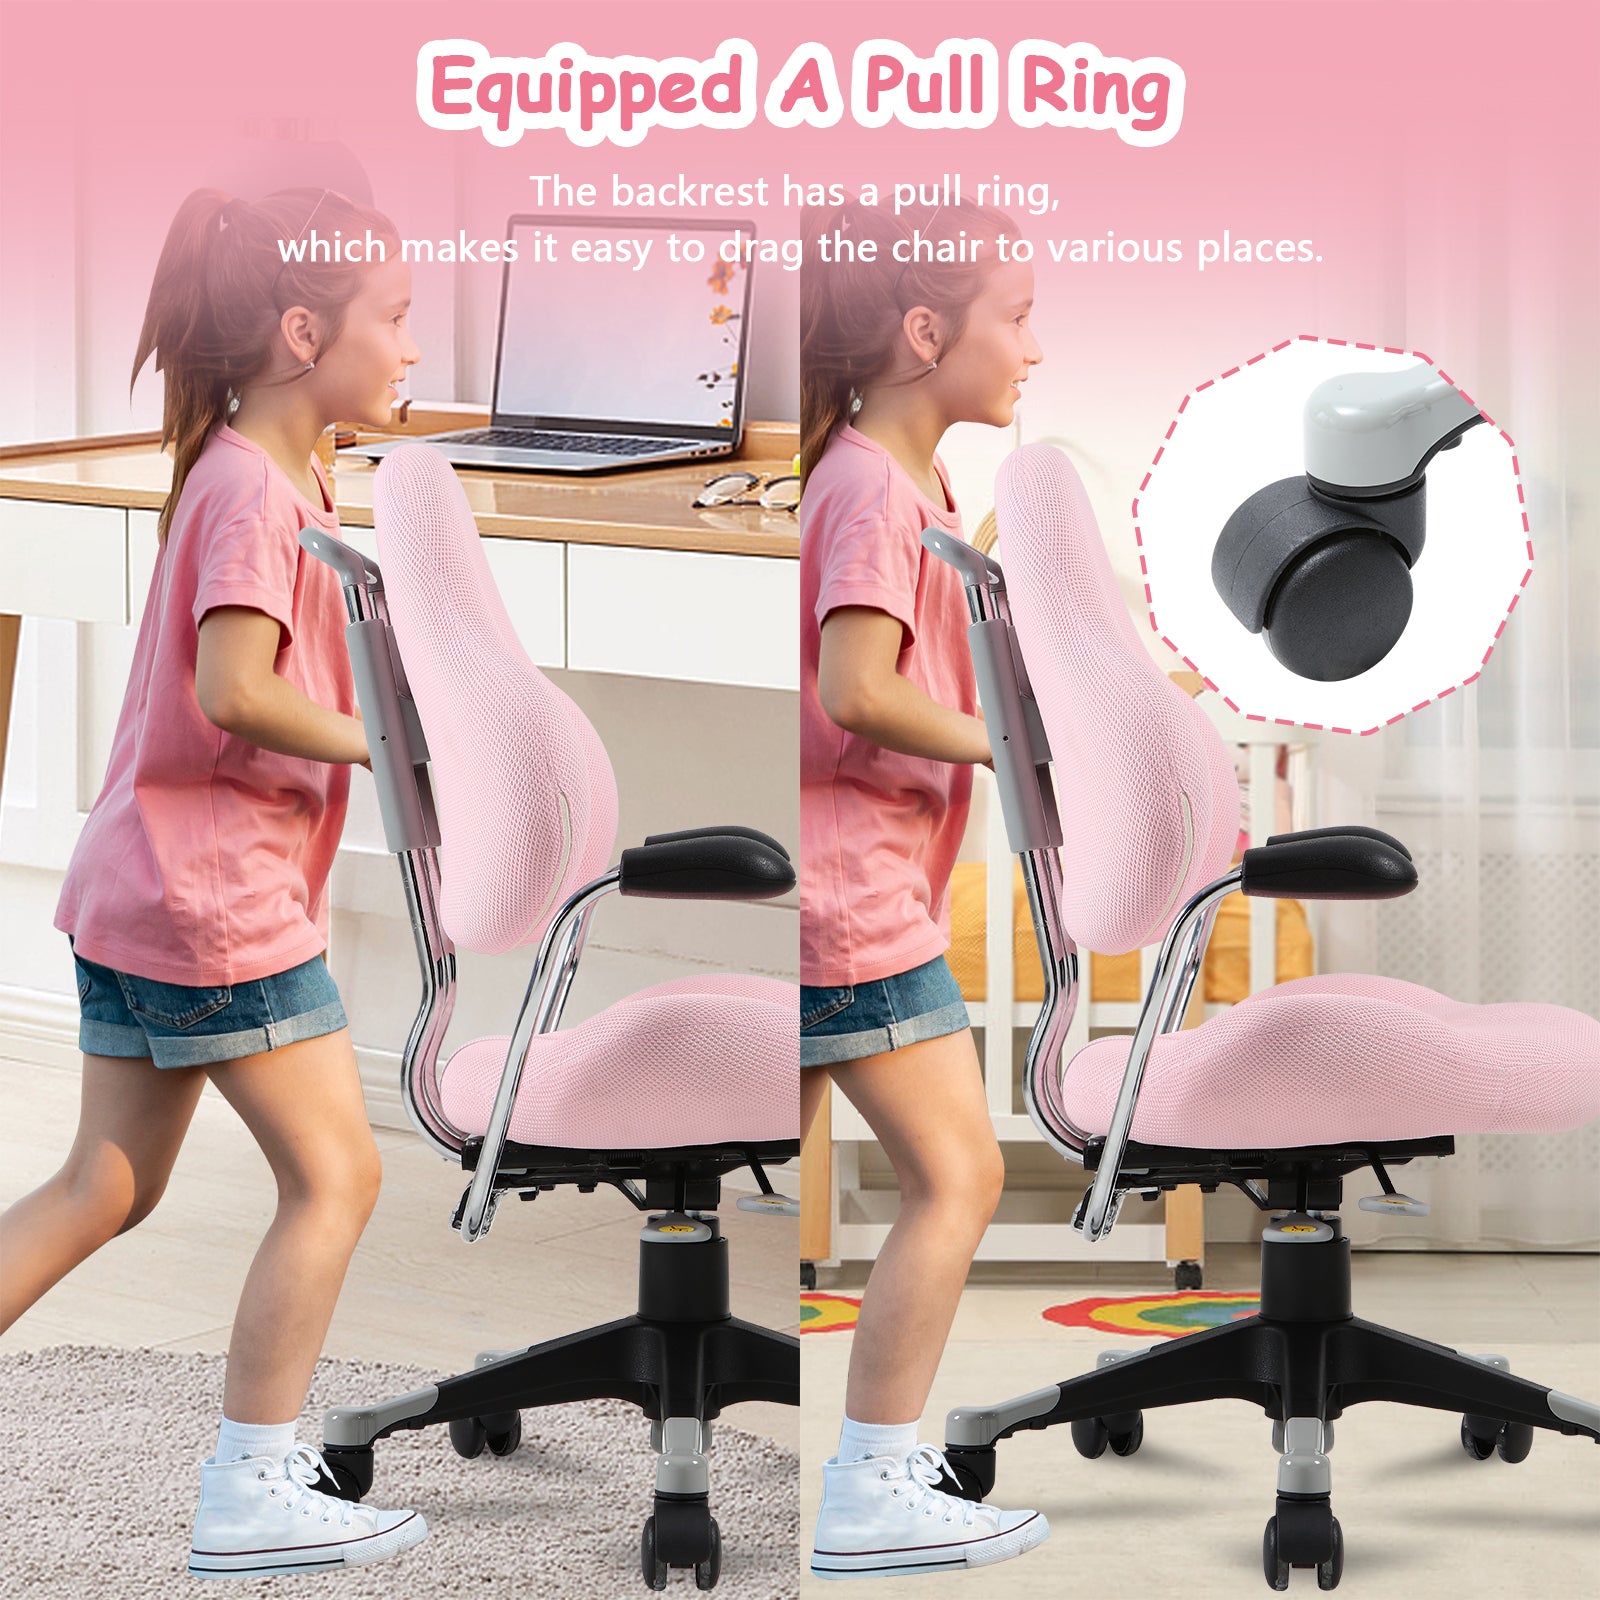 Ergonomic Children Kids Study Desk Chair Swivel Chair with Adjustable Height Mesh Mid-Back, Pink